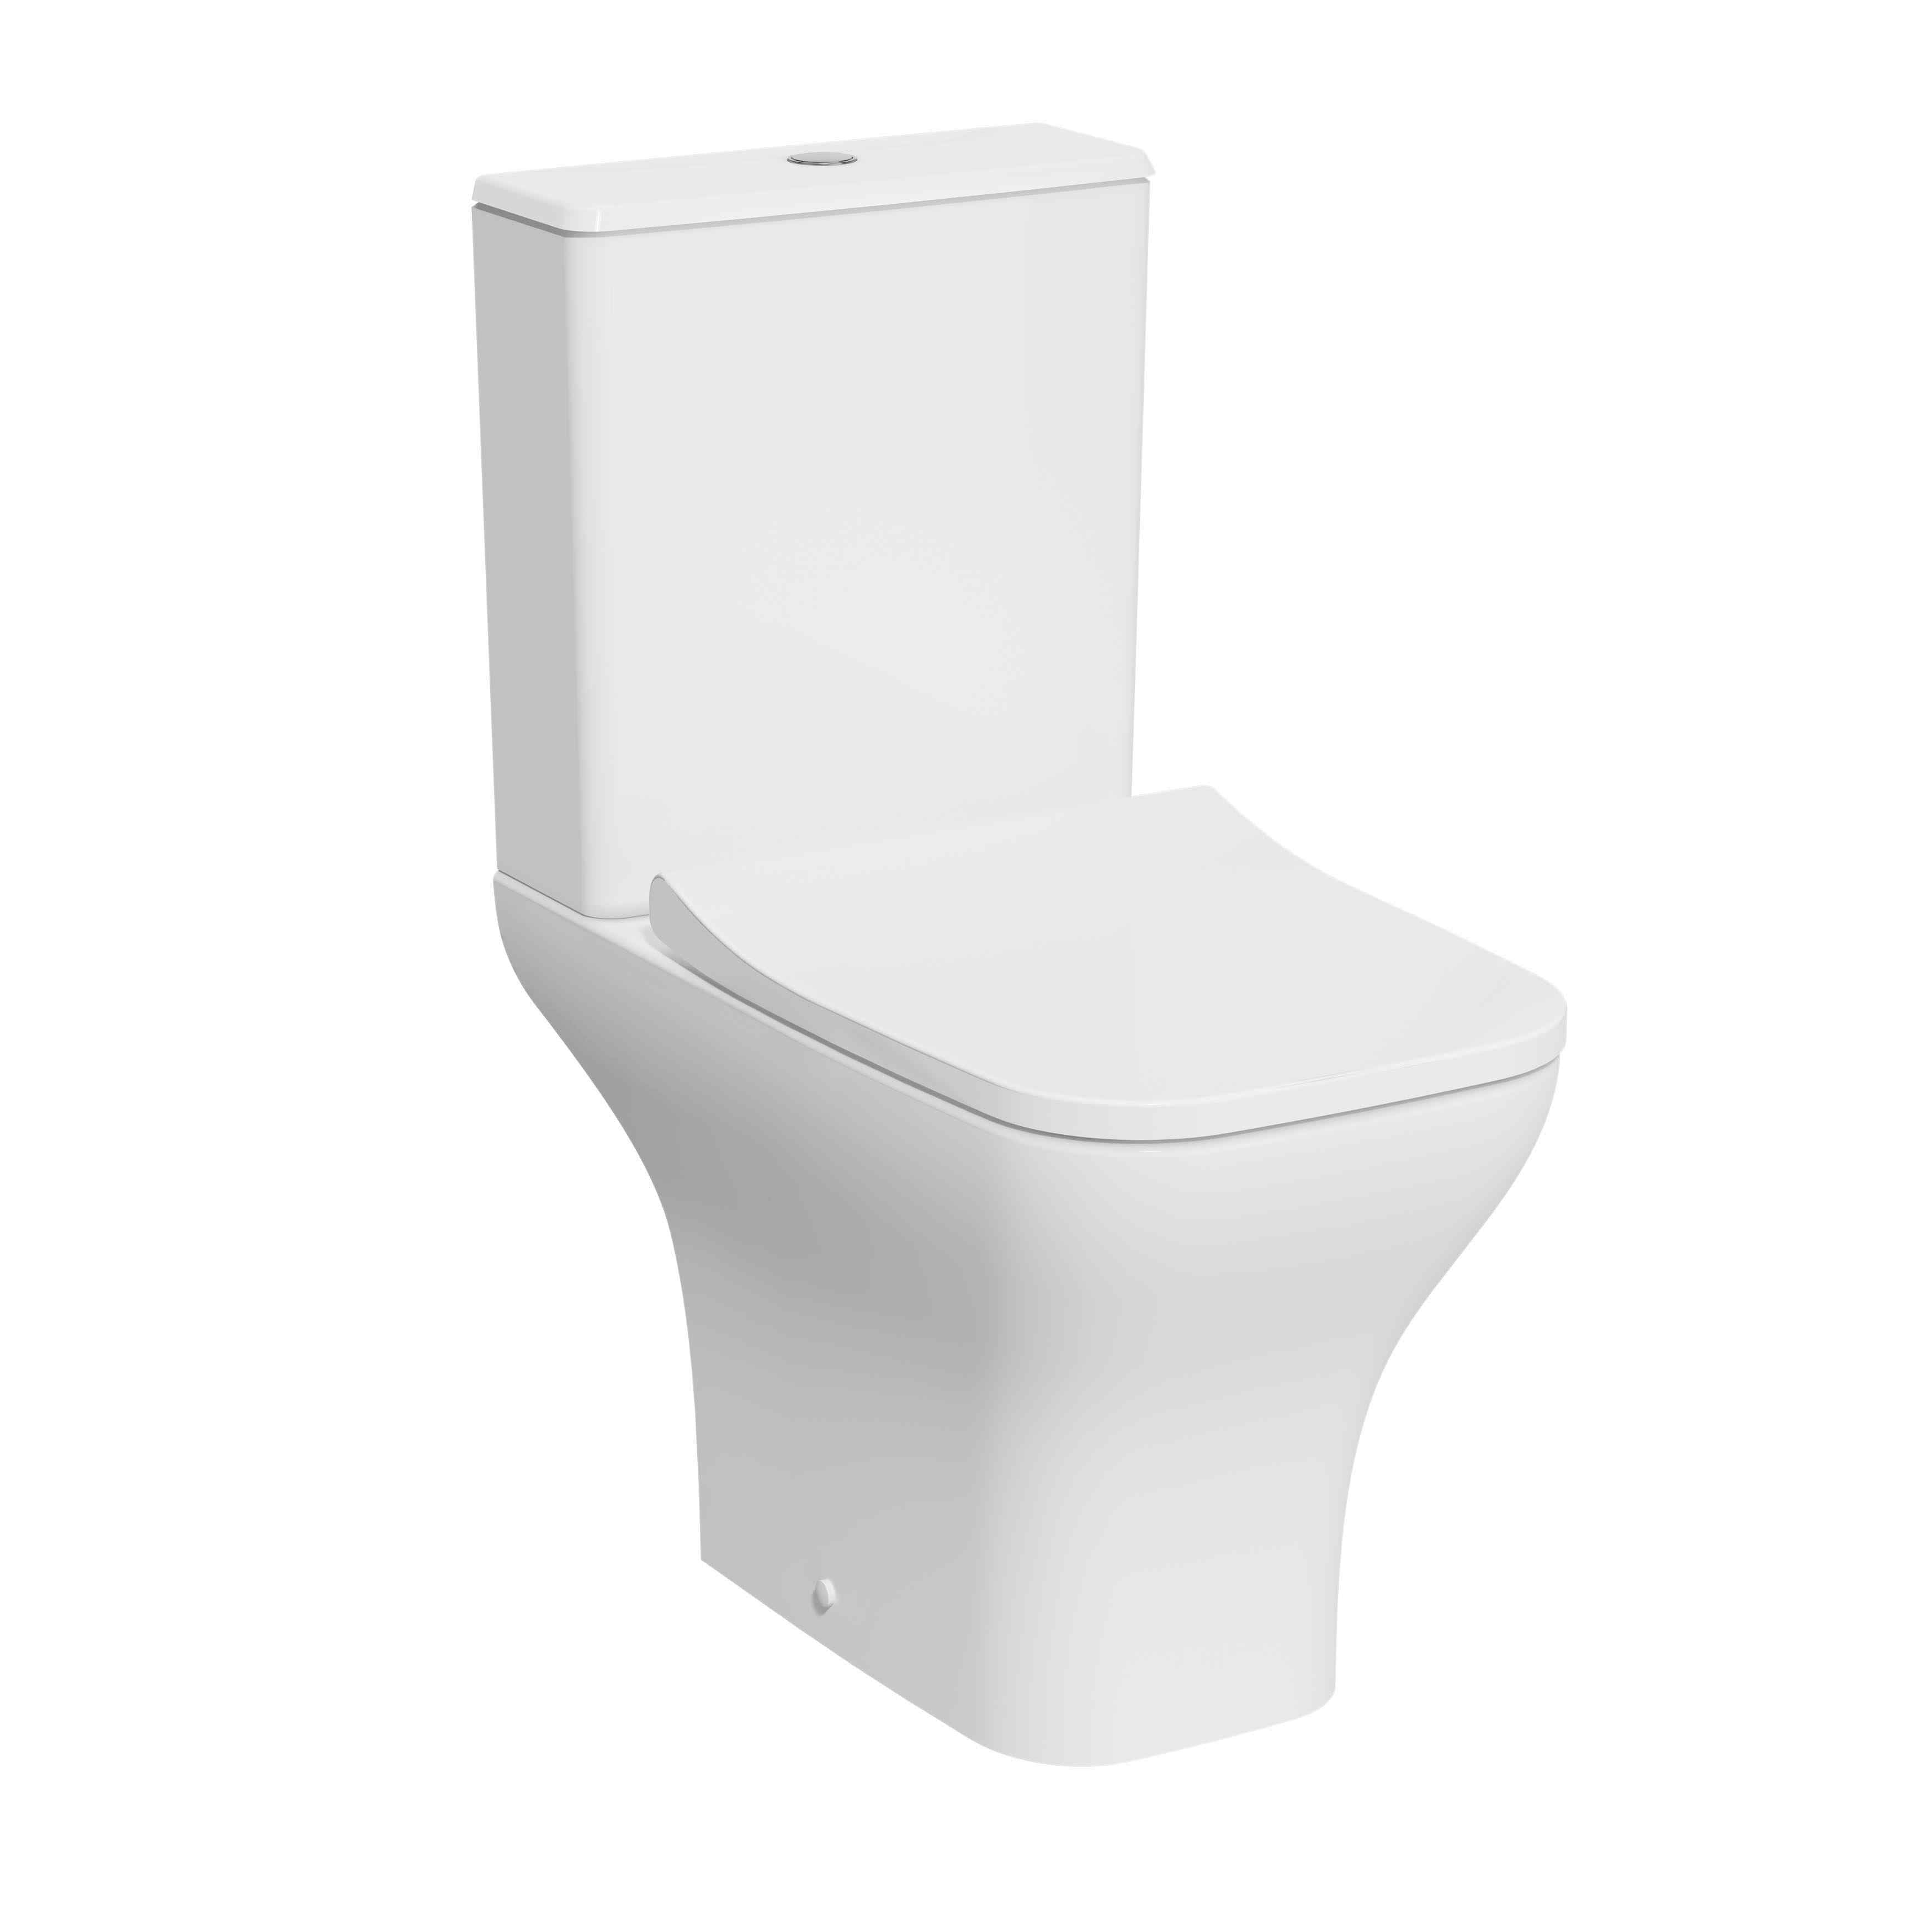 Premium Eklipse Round Bathroom Suite with 1000/1100mm Vanity Unit, Basin, and Toilet